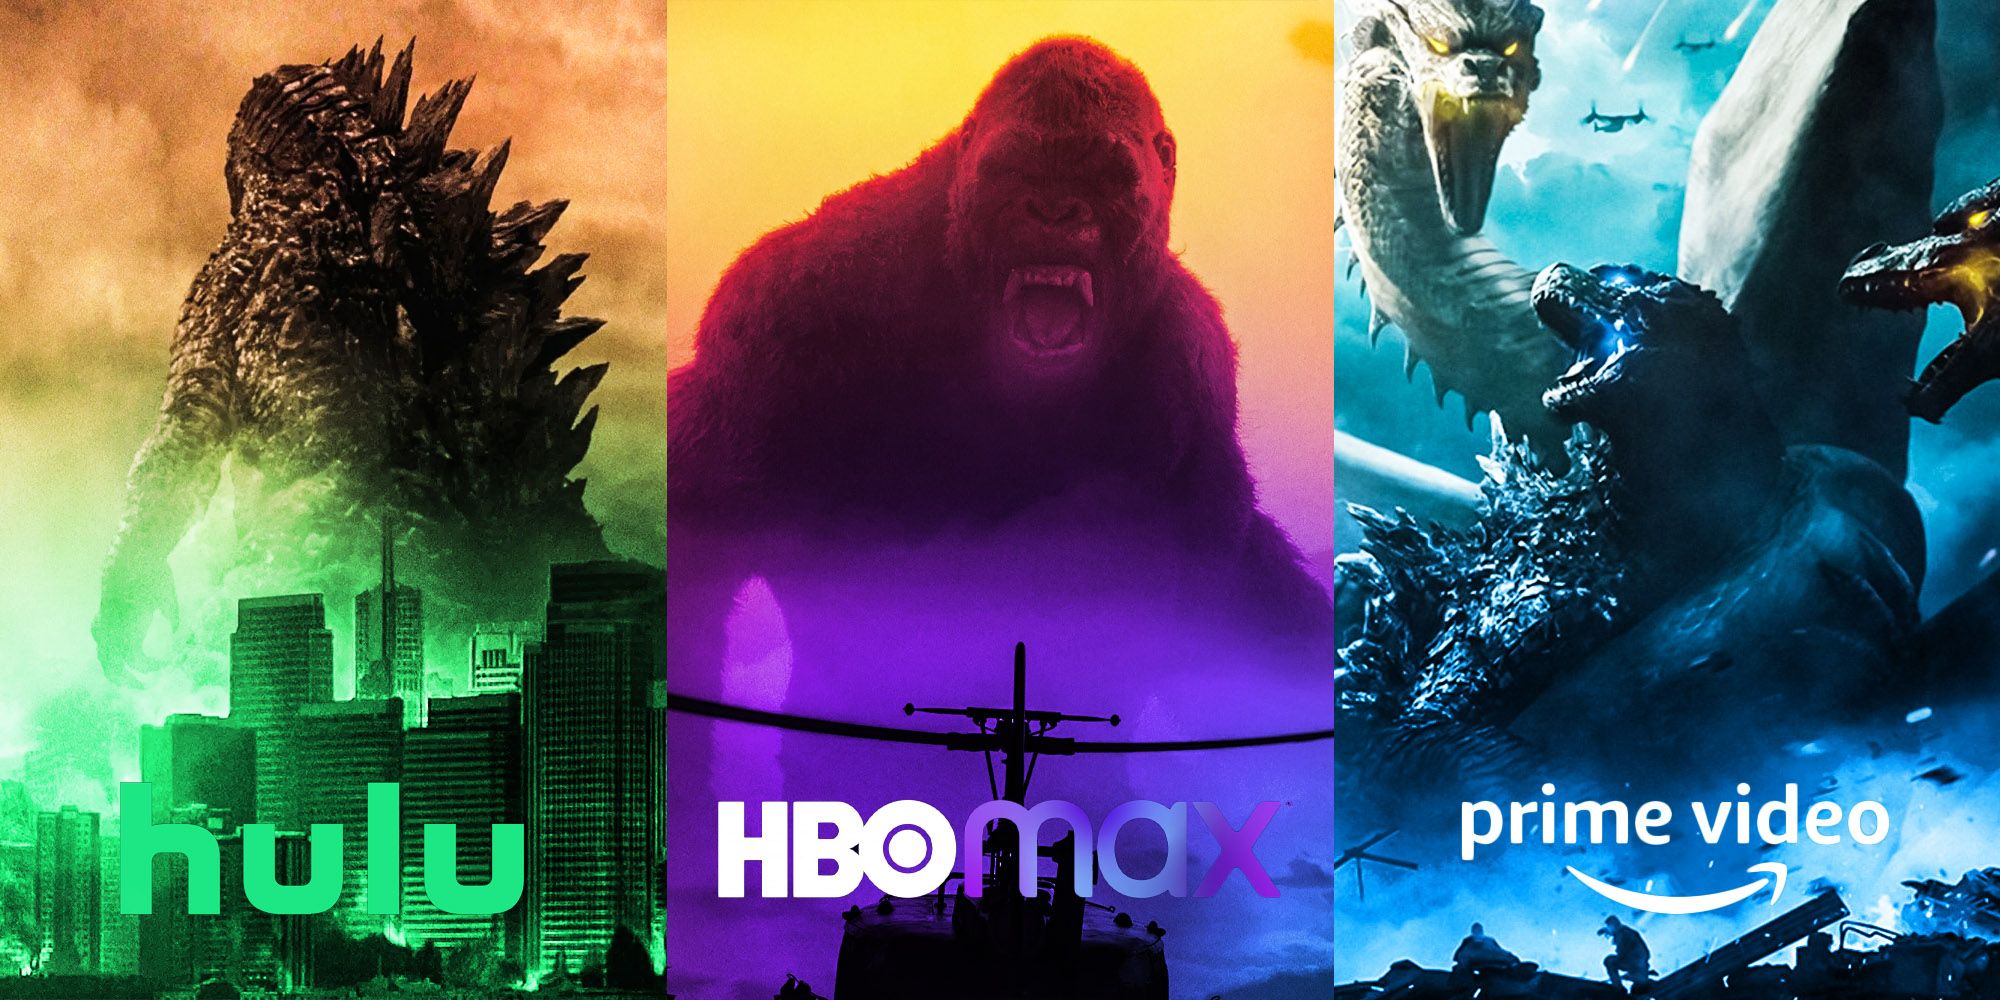 Godzilla vs. Destoroyah streaming: watch online